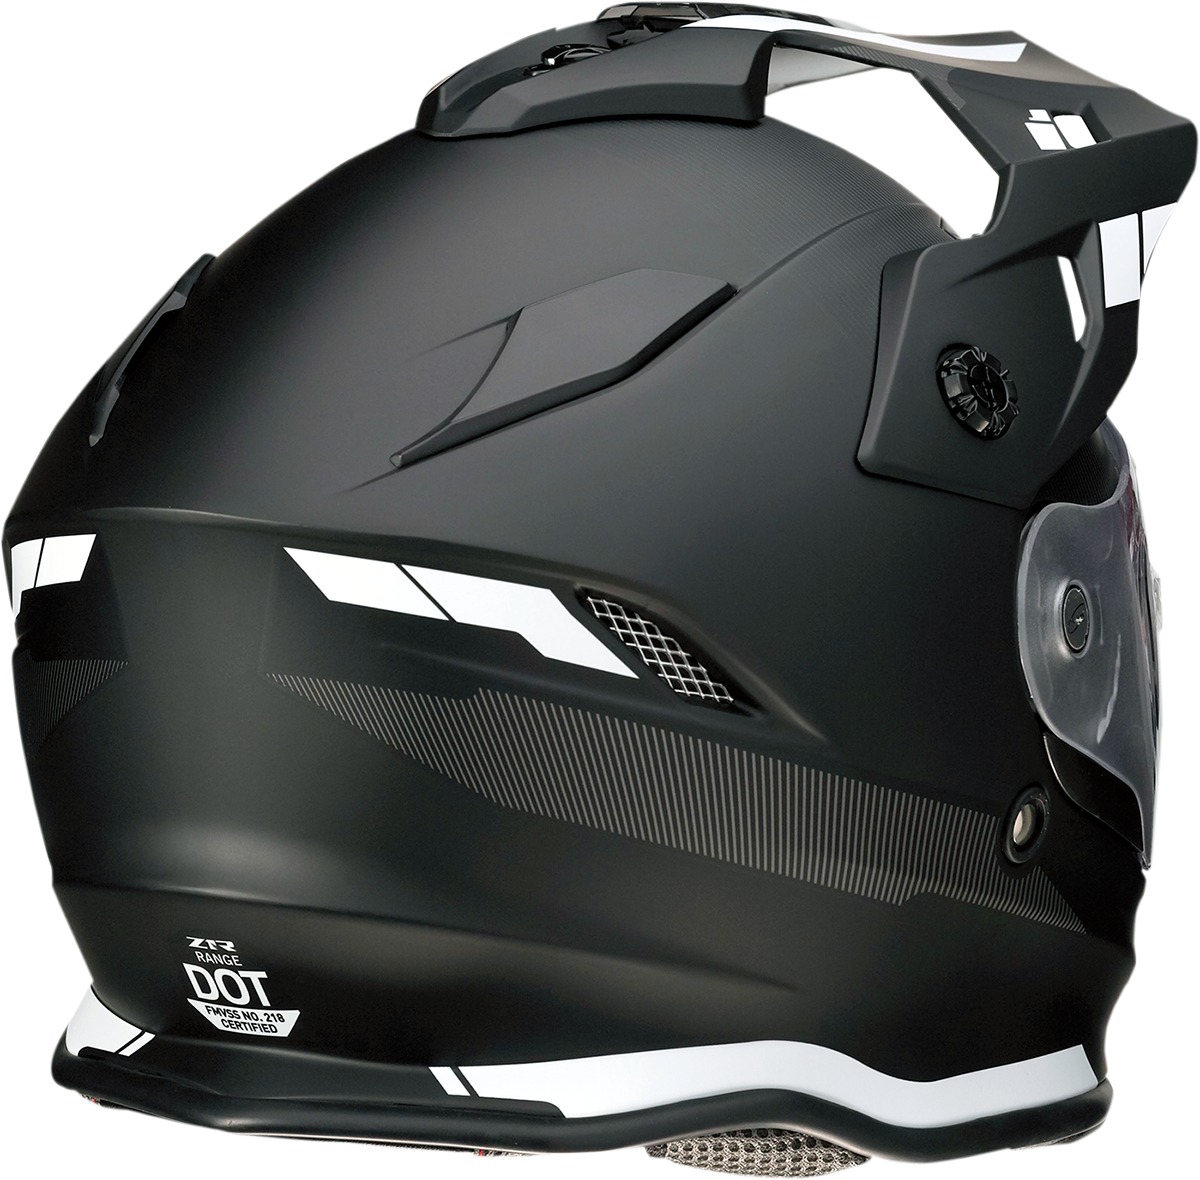 Range Dual Sport Helmet Small - Uptake Black/White - Click Image to Close